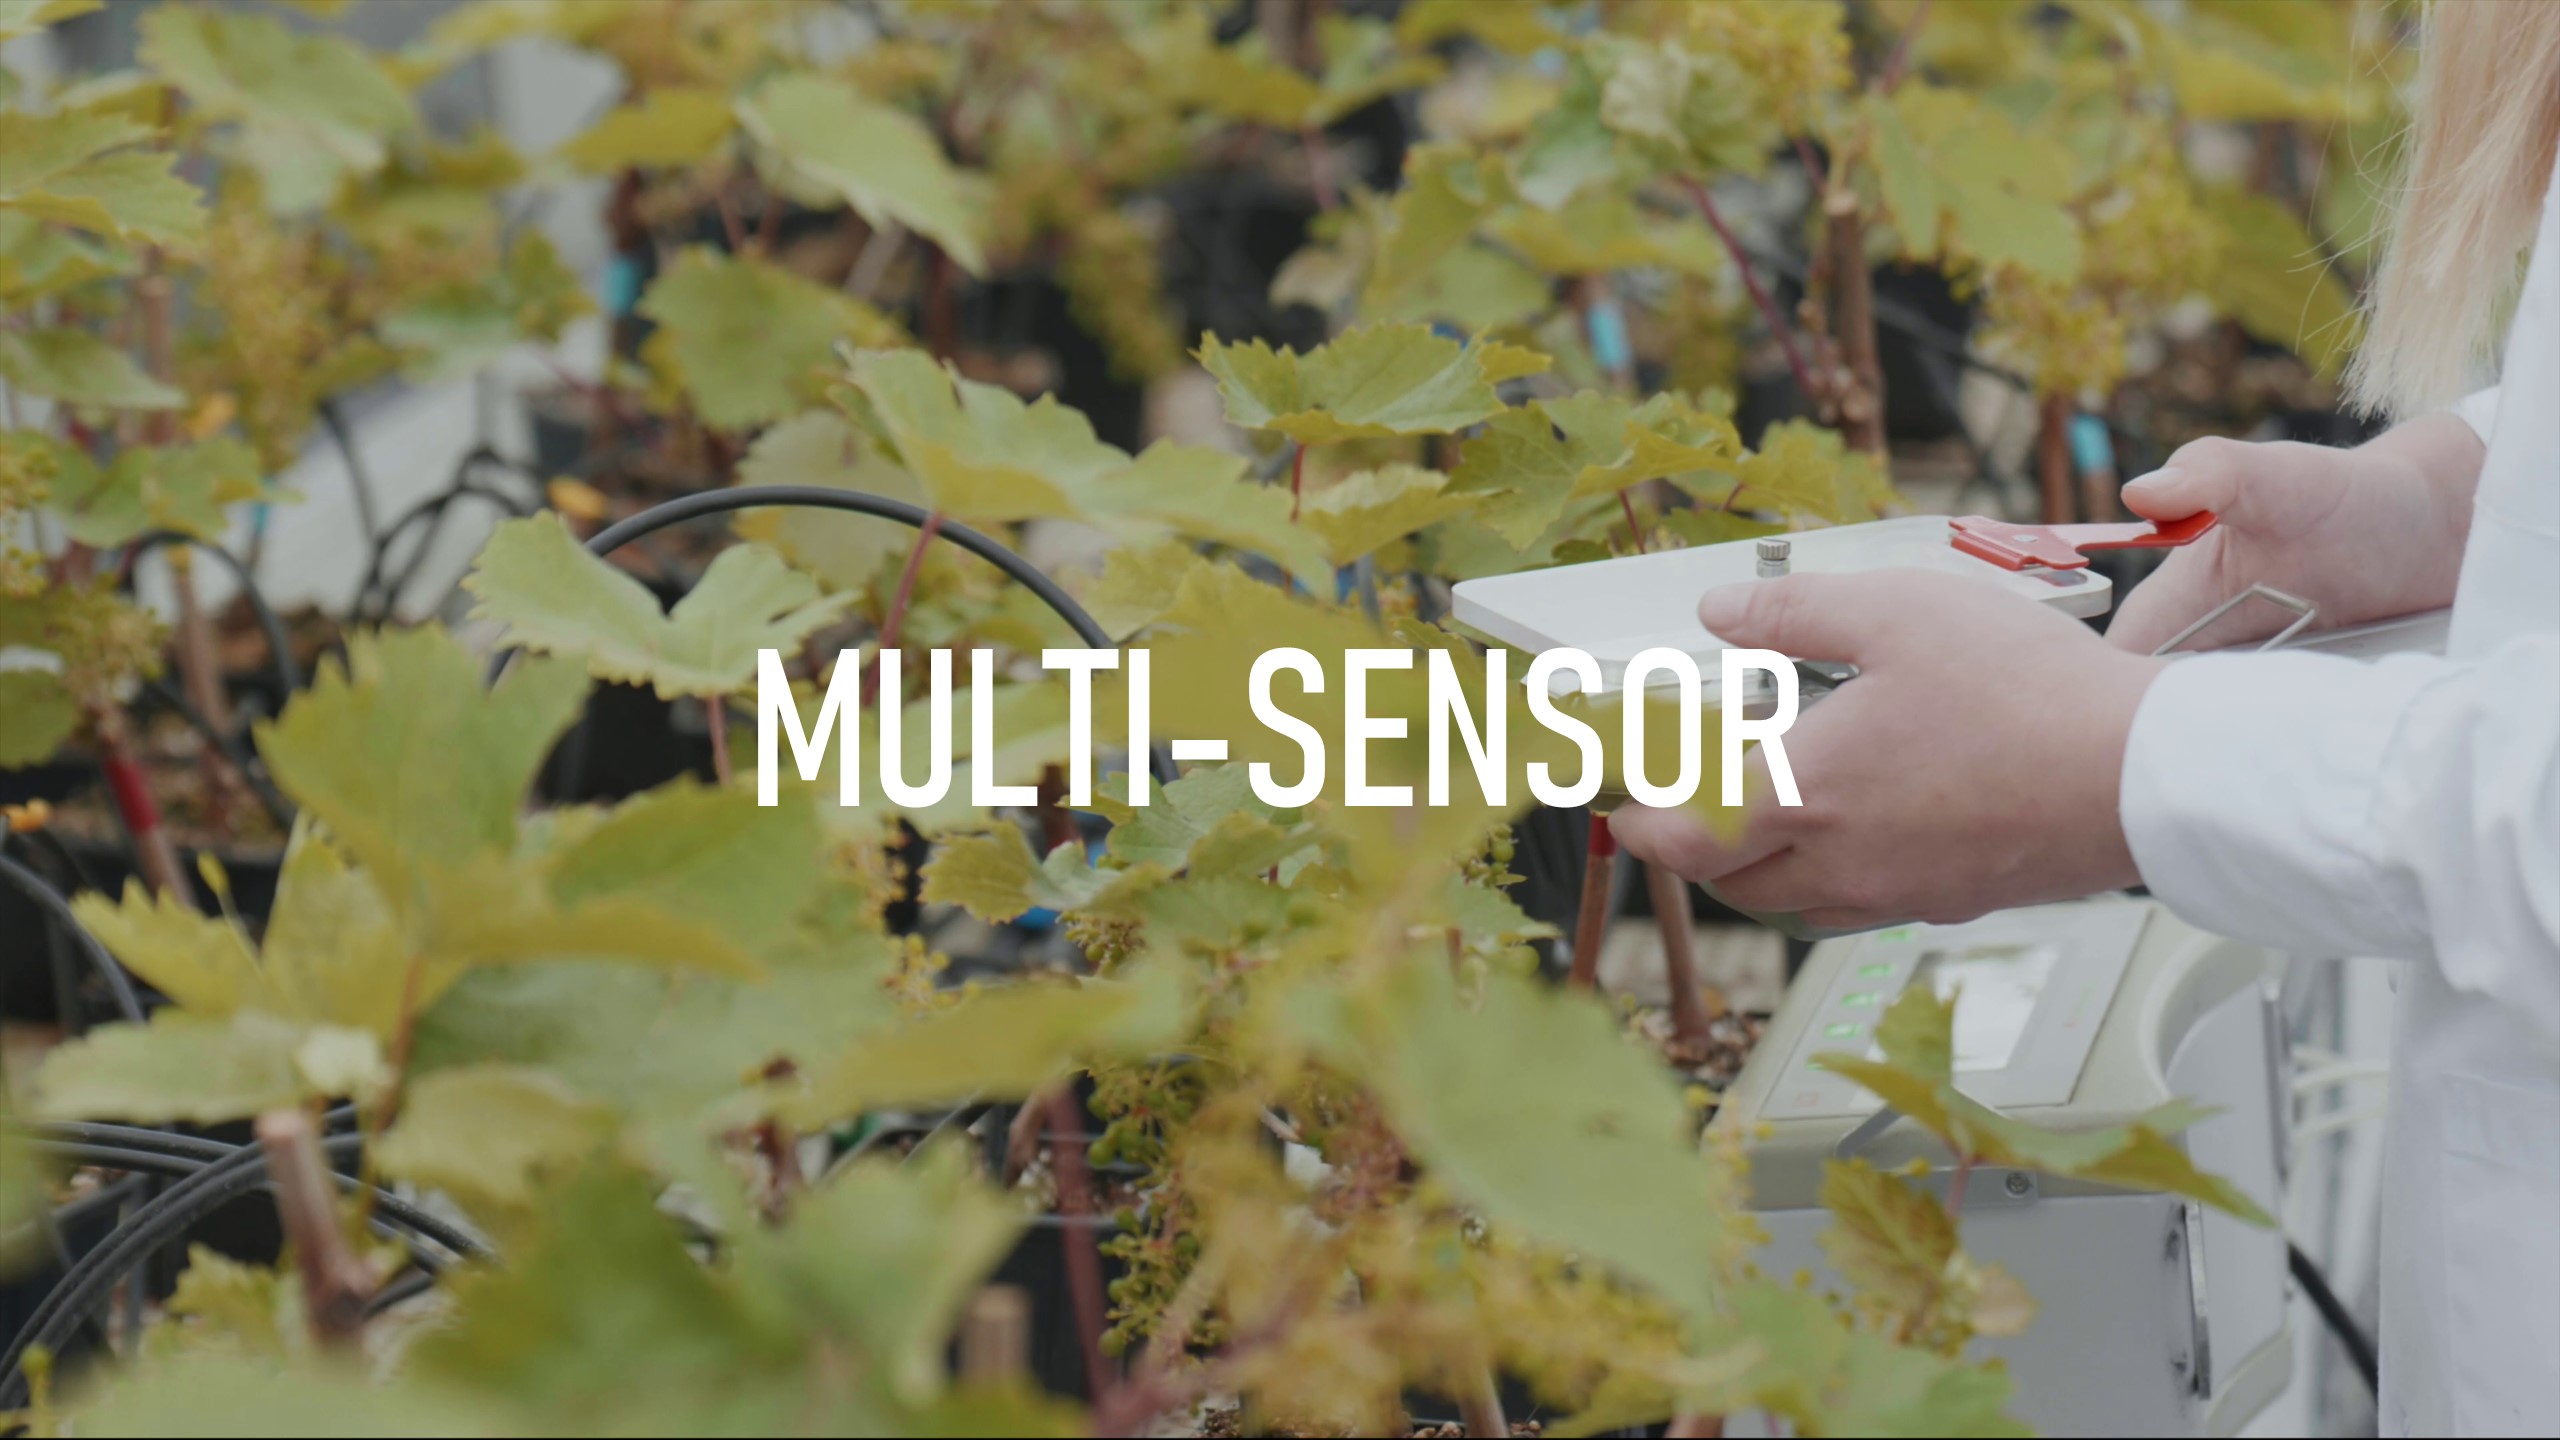 Multi-sensor